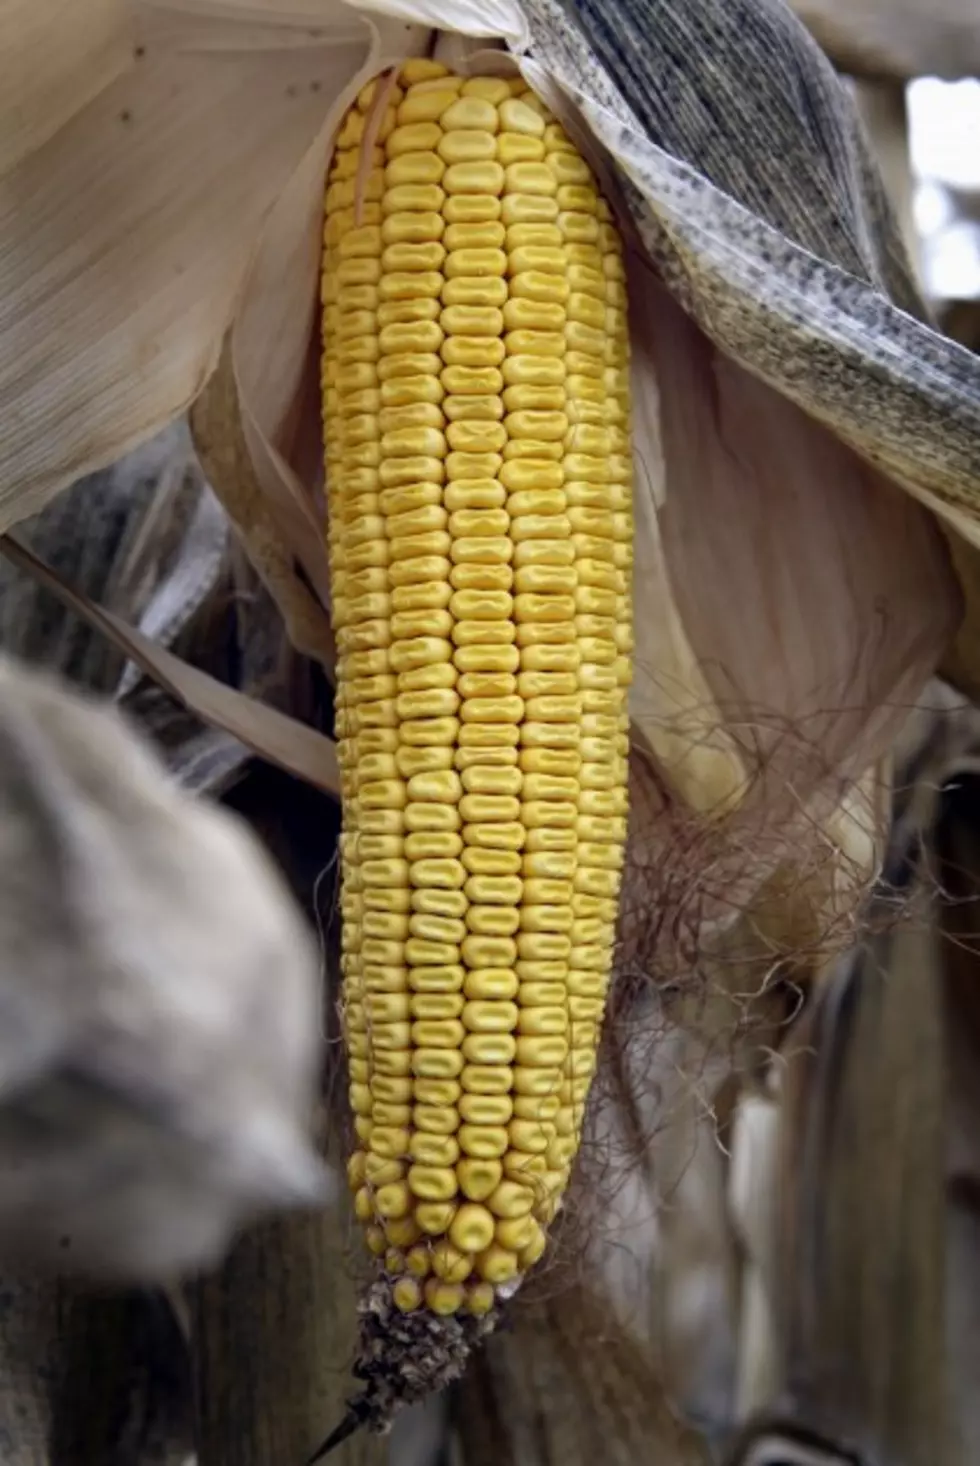 GMO Corn Crops Creating Super Bugs?